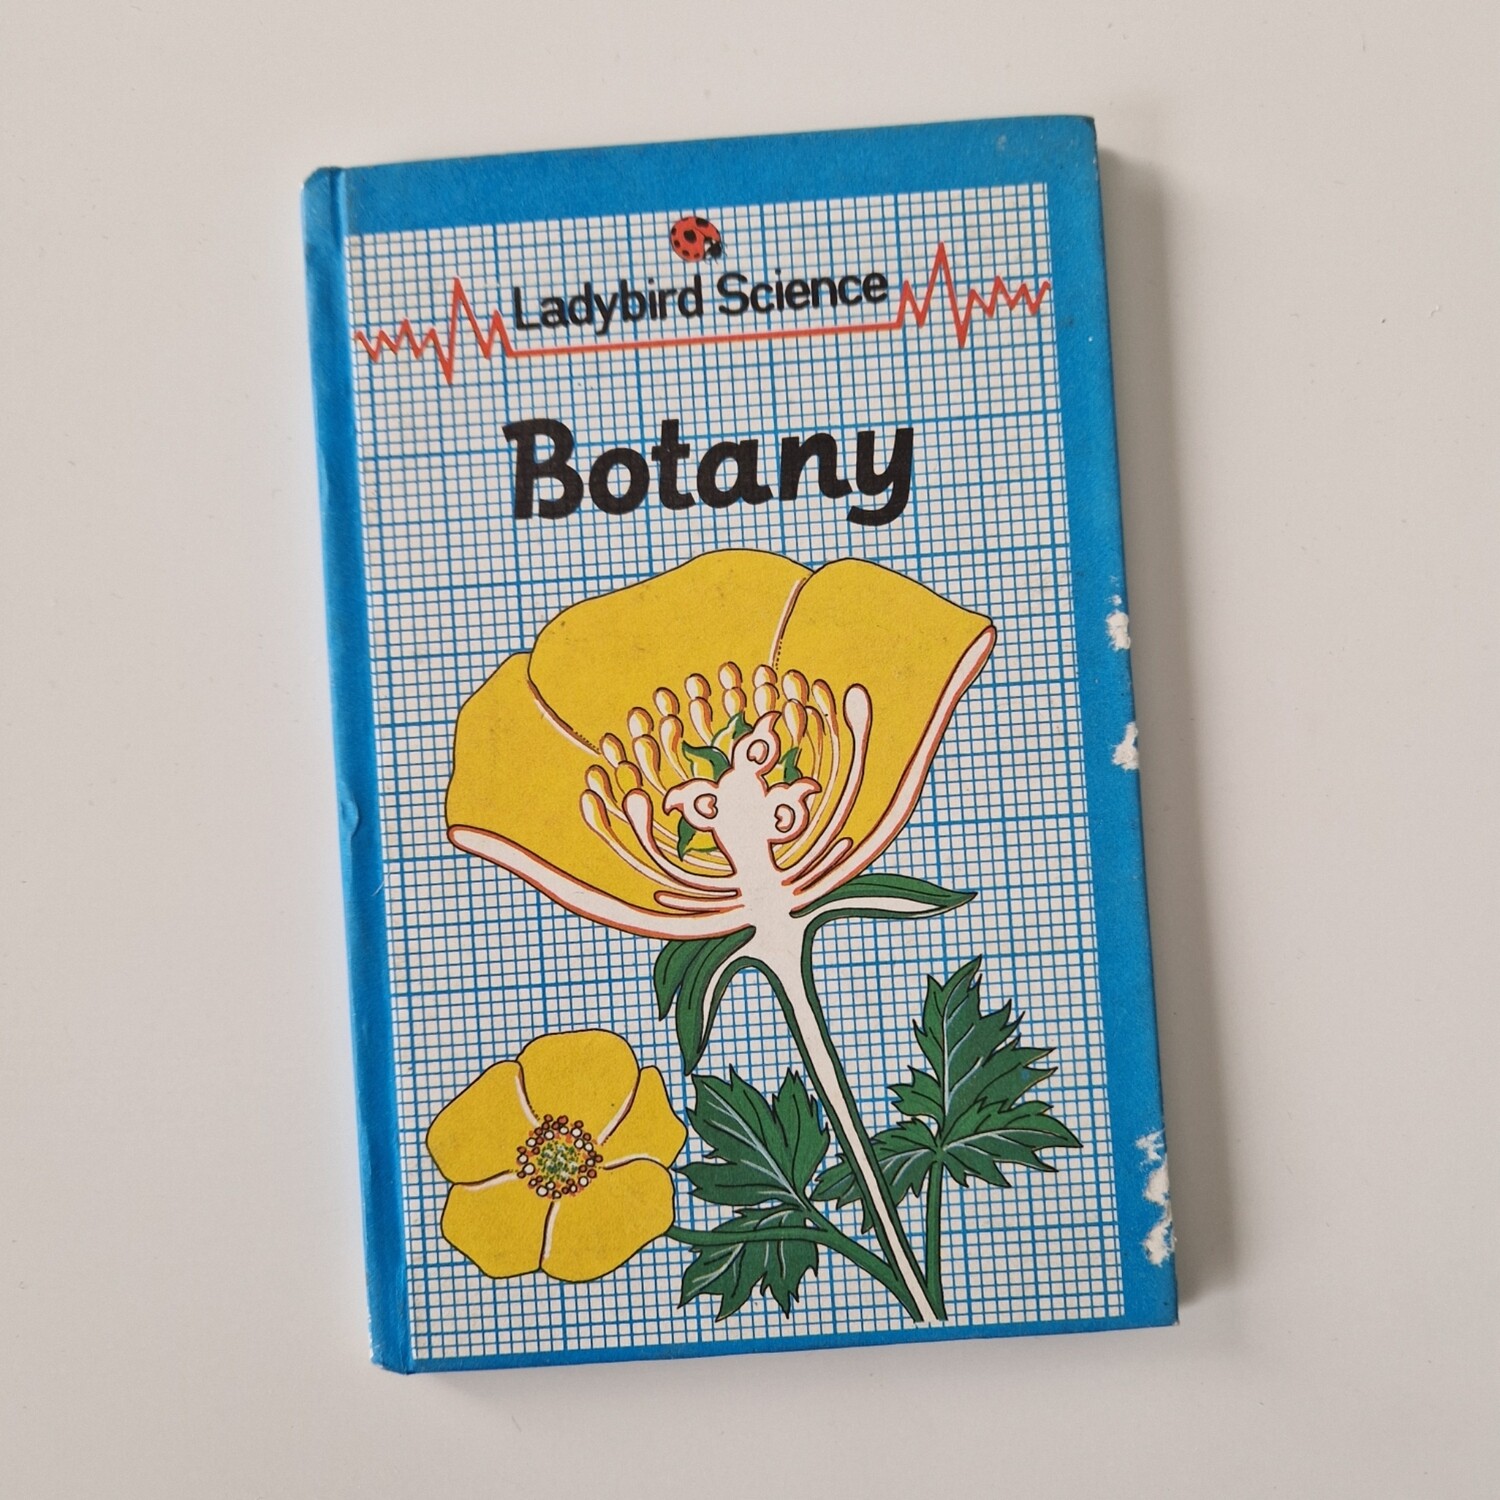 Botany - Ladybird Science Book 1983 - flowers, plants